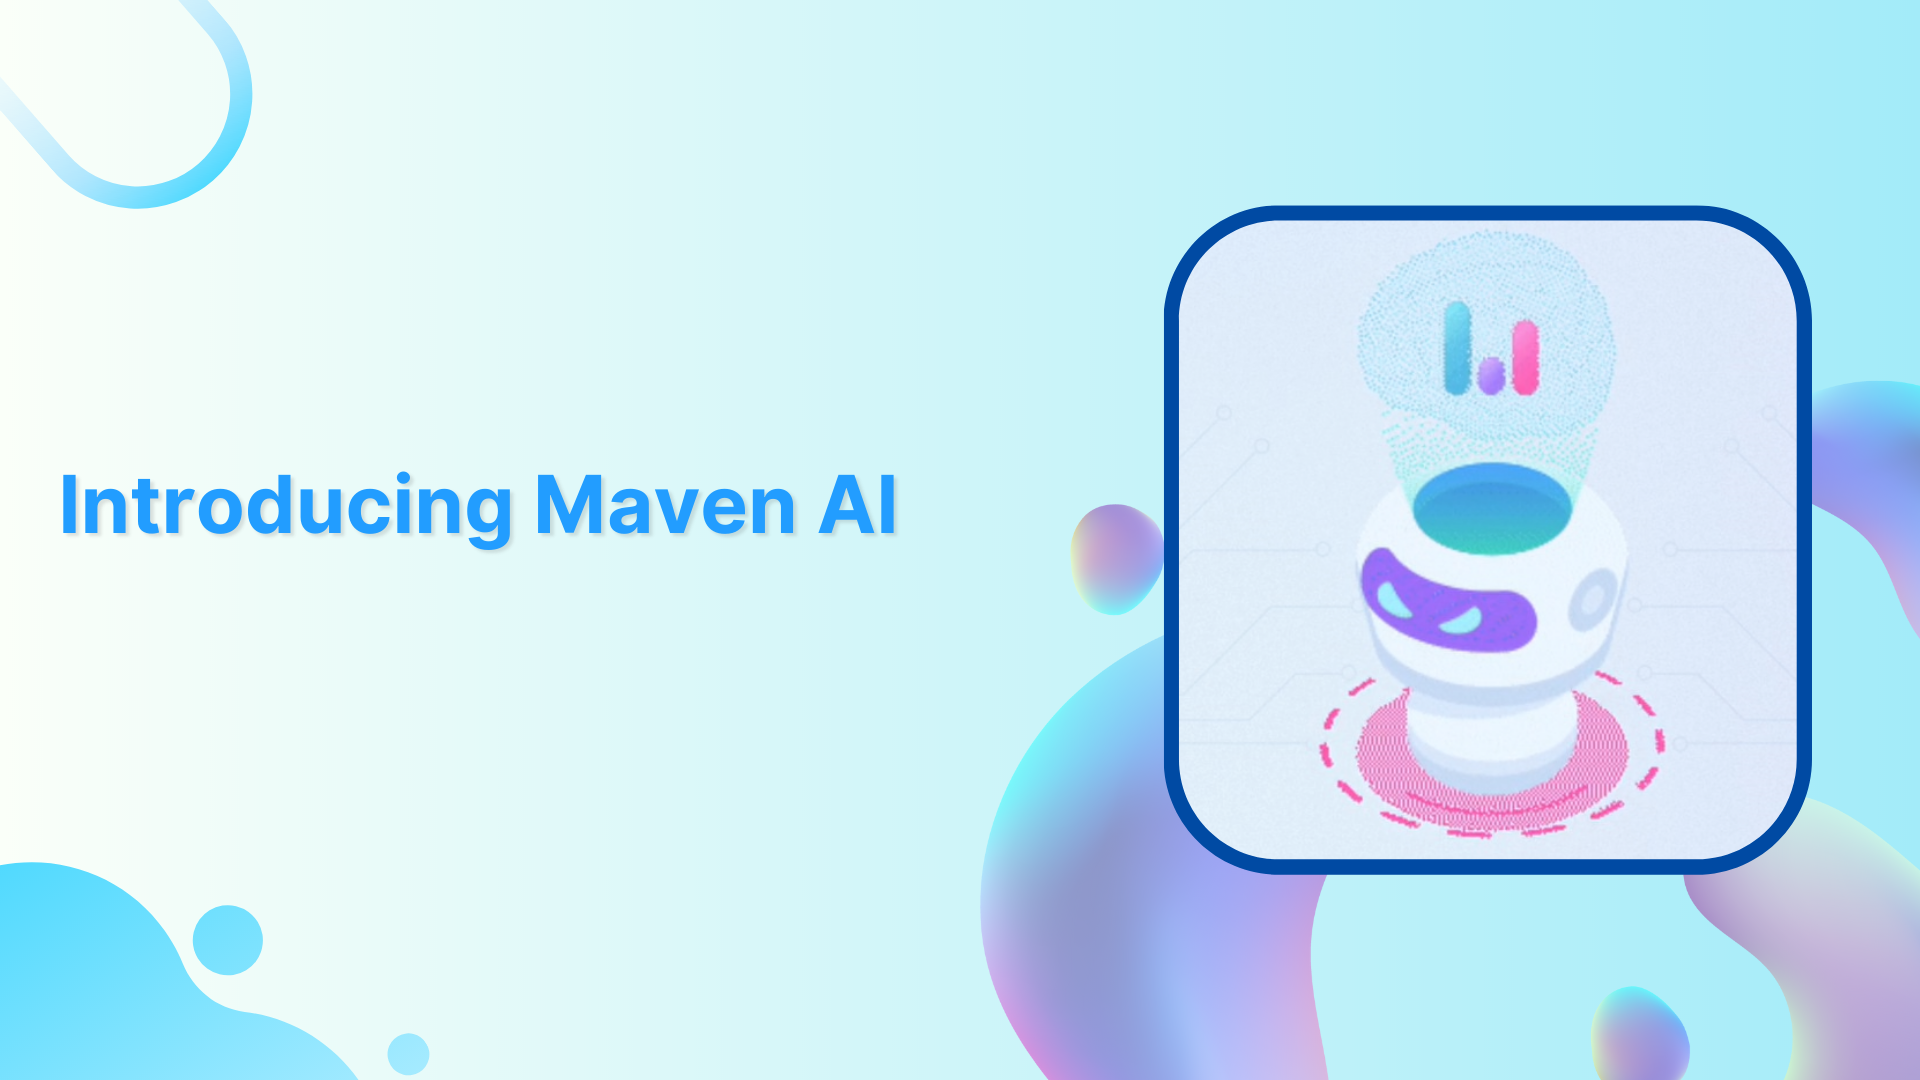 Usermaven Introduces Maven AI: Revolutionizing Data Analysis